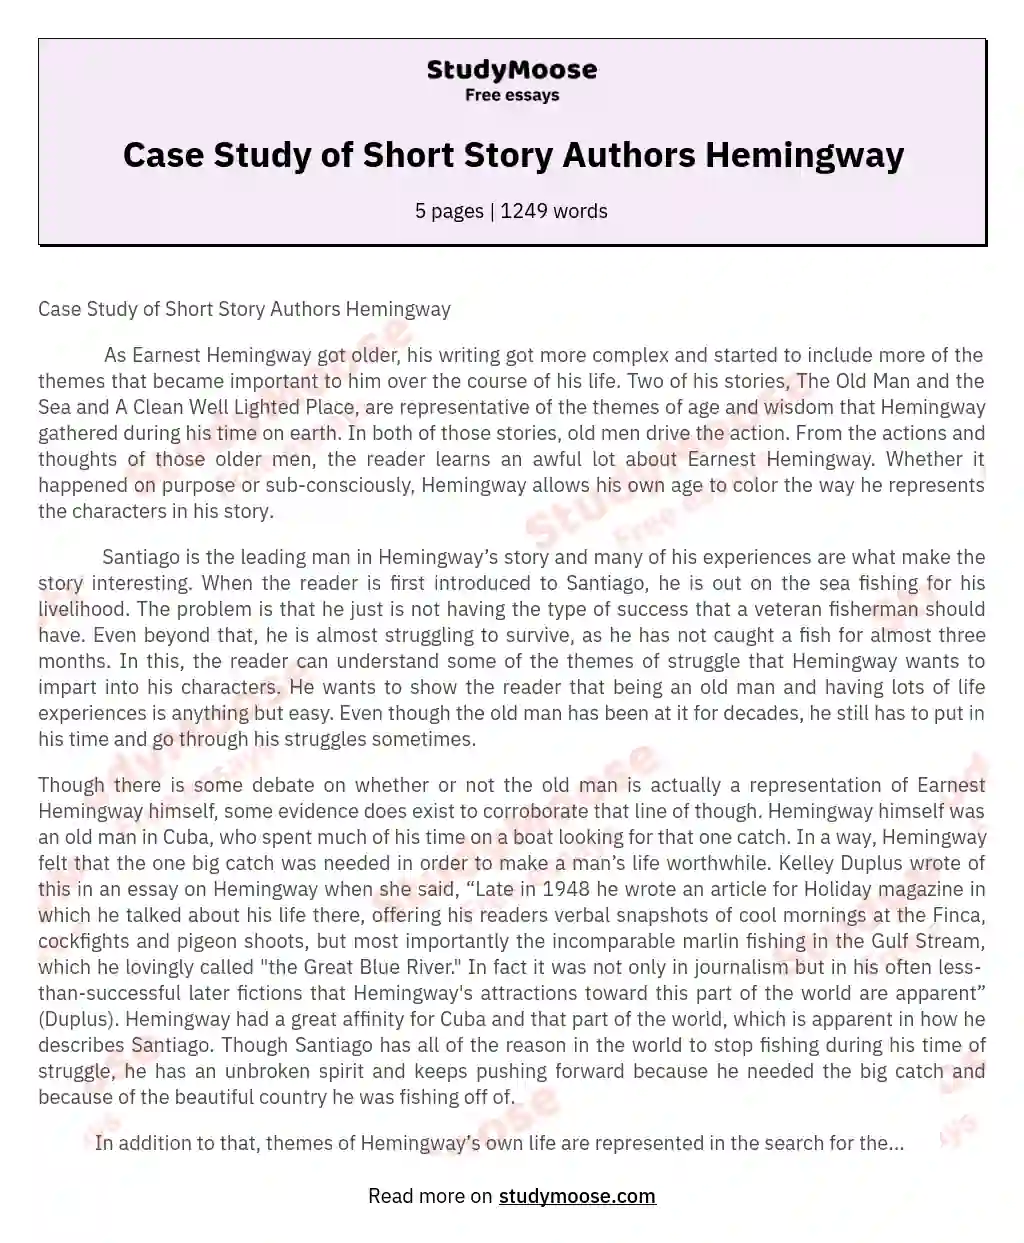 Case Study of Short Story Authors Hemingway essay